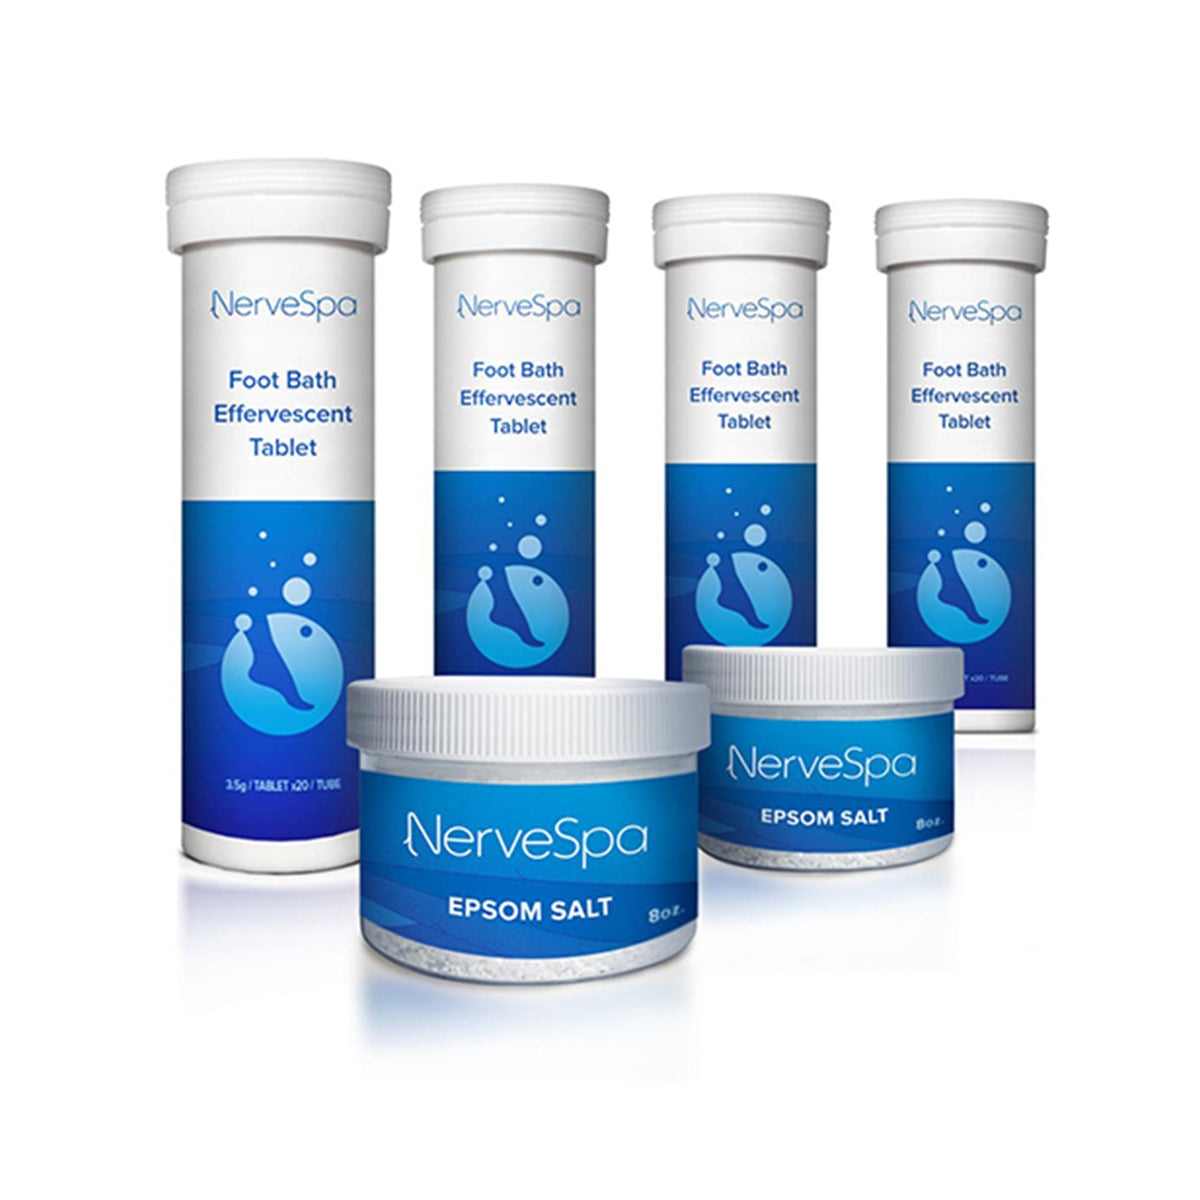 Nerve Spa Foot bath Supply Kit